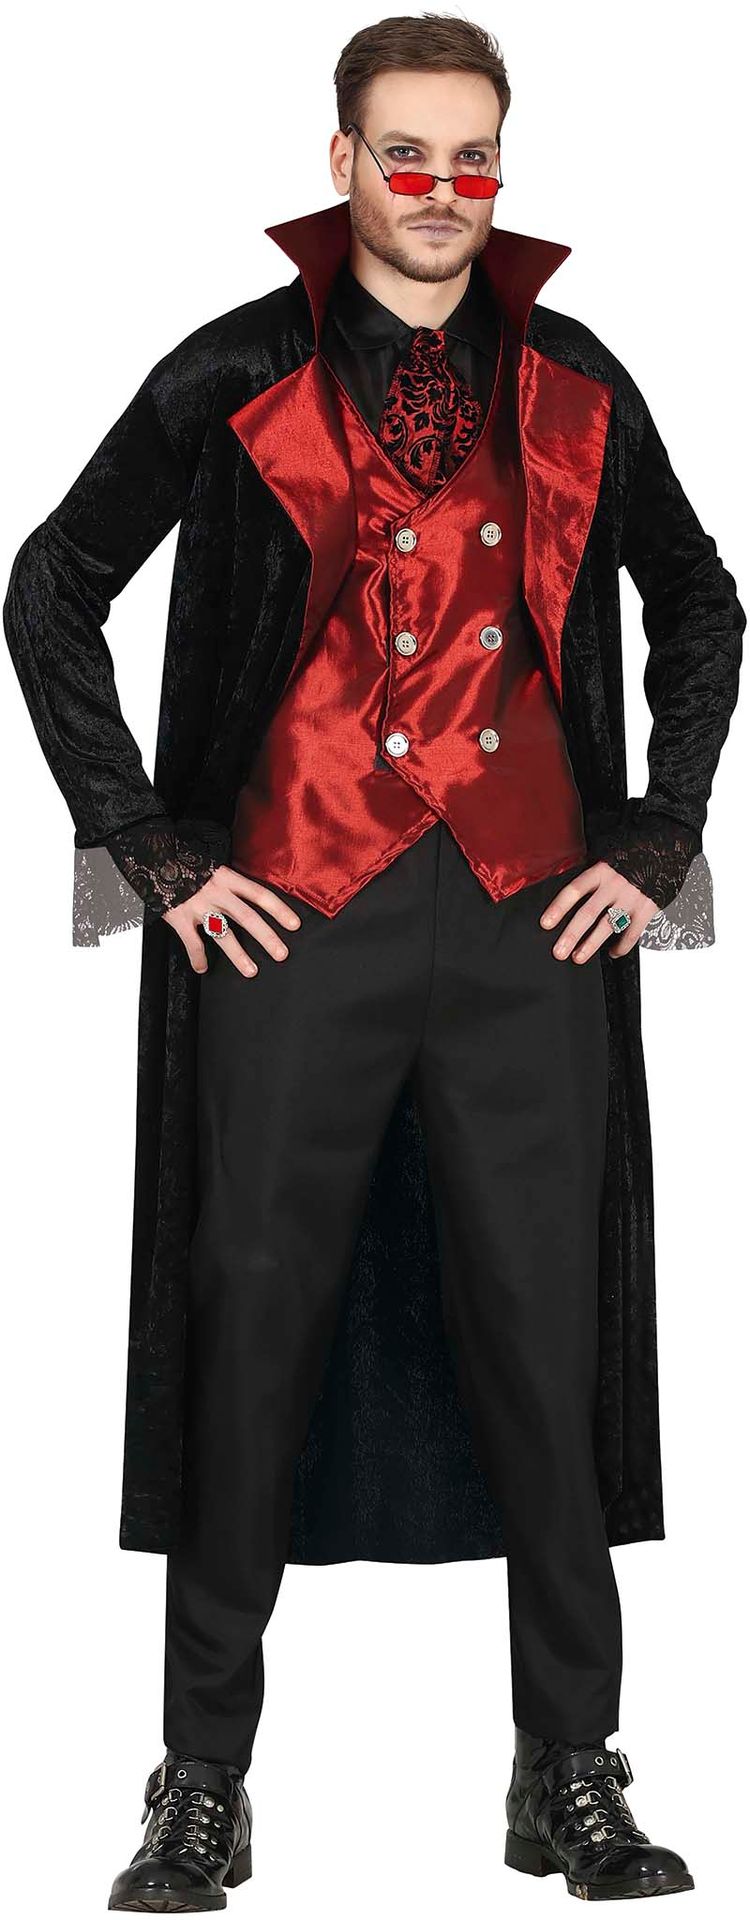 Rode vampier kostuum man